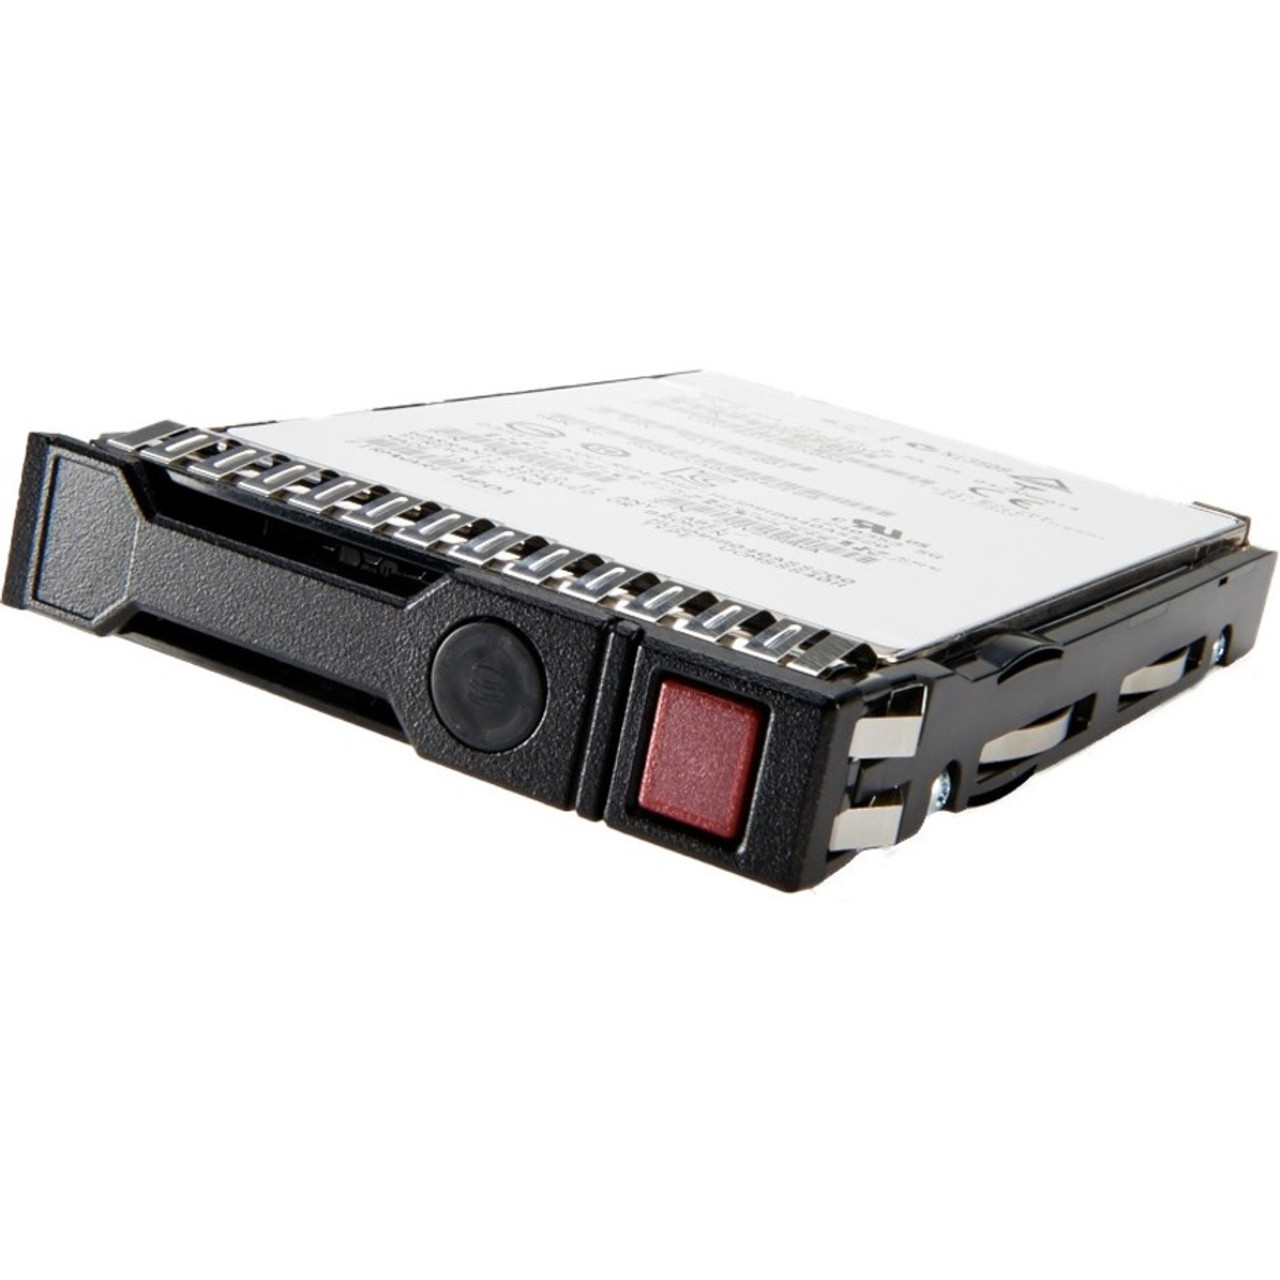 HPE PM6 400 GB Solid State Drive - 2.5" Internal - SAS (24Gb/s SAS) - Write Intensive - P26295-B21